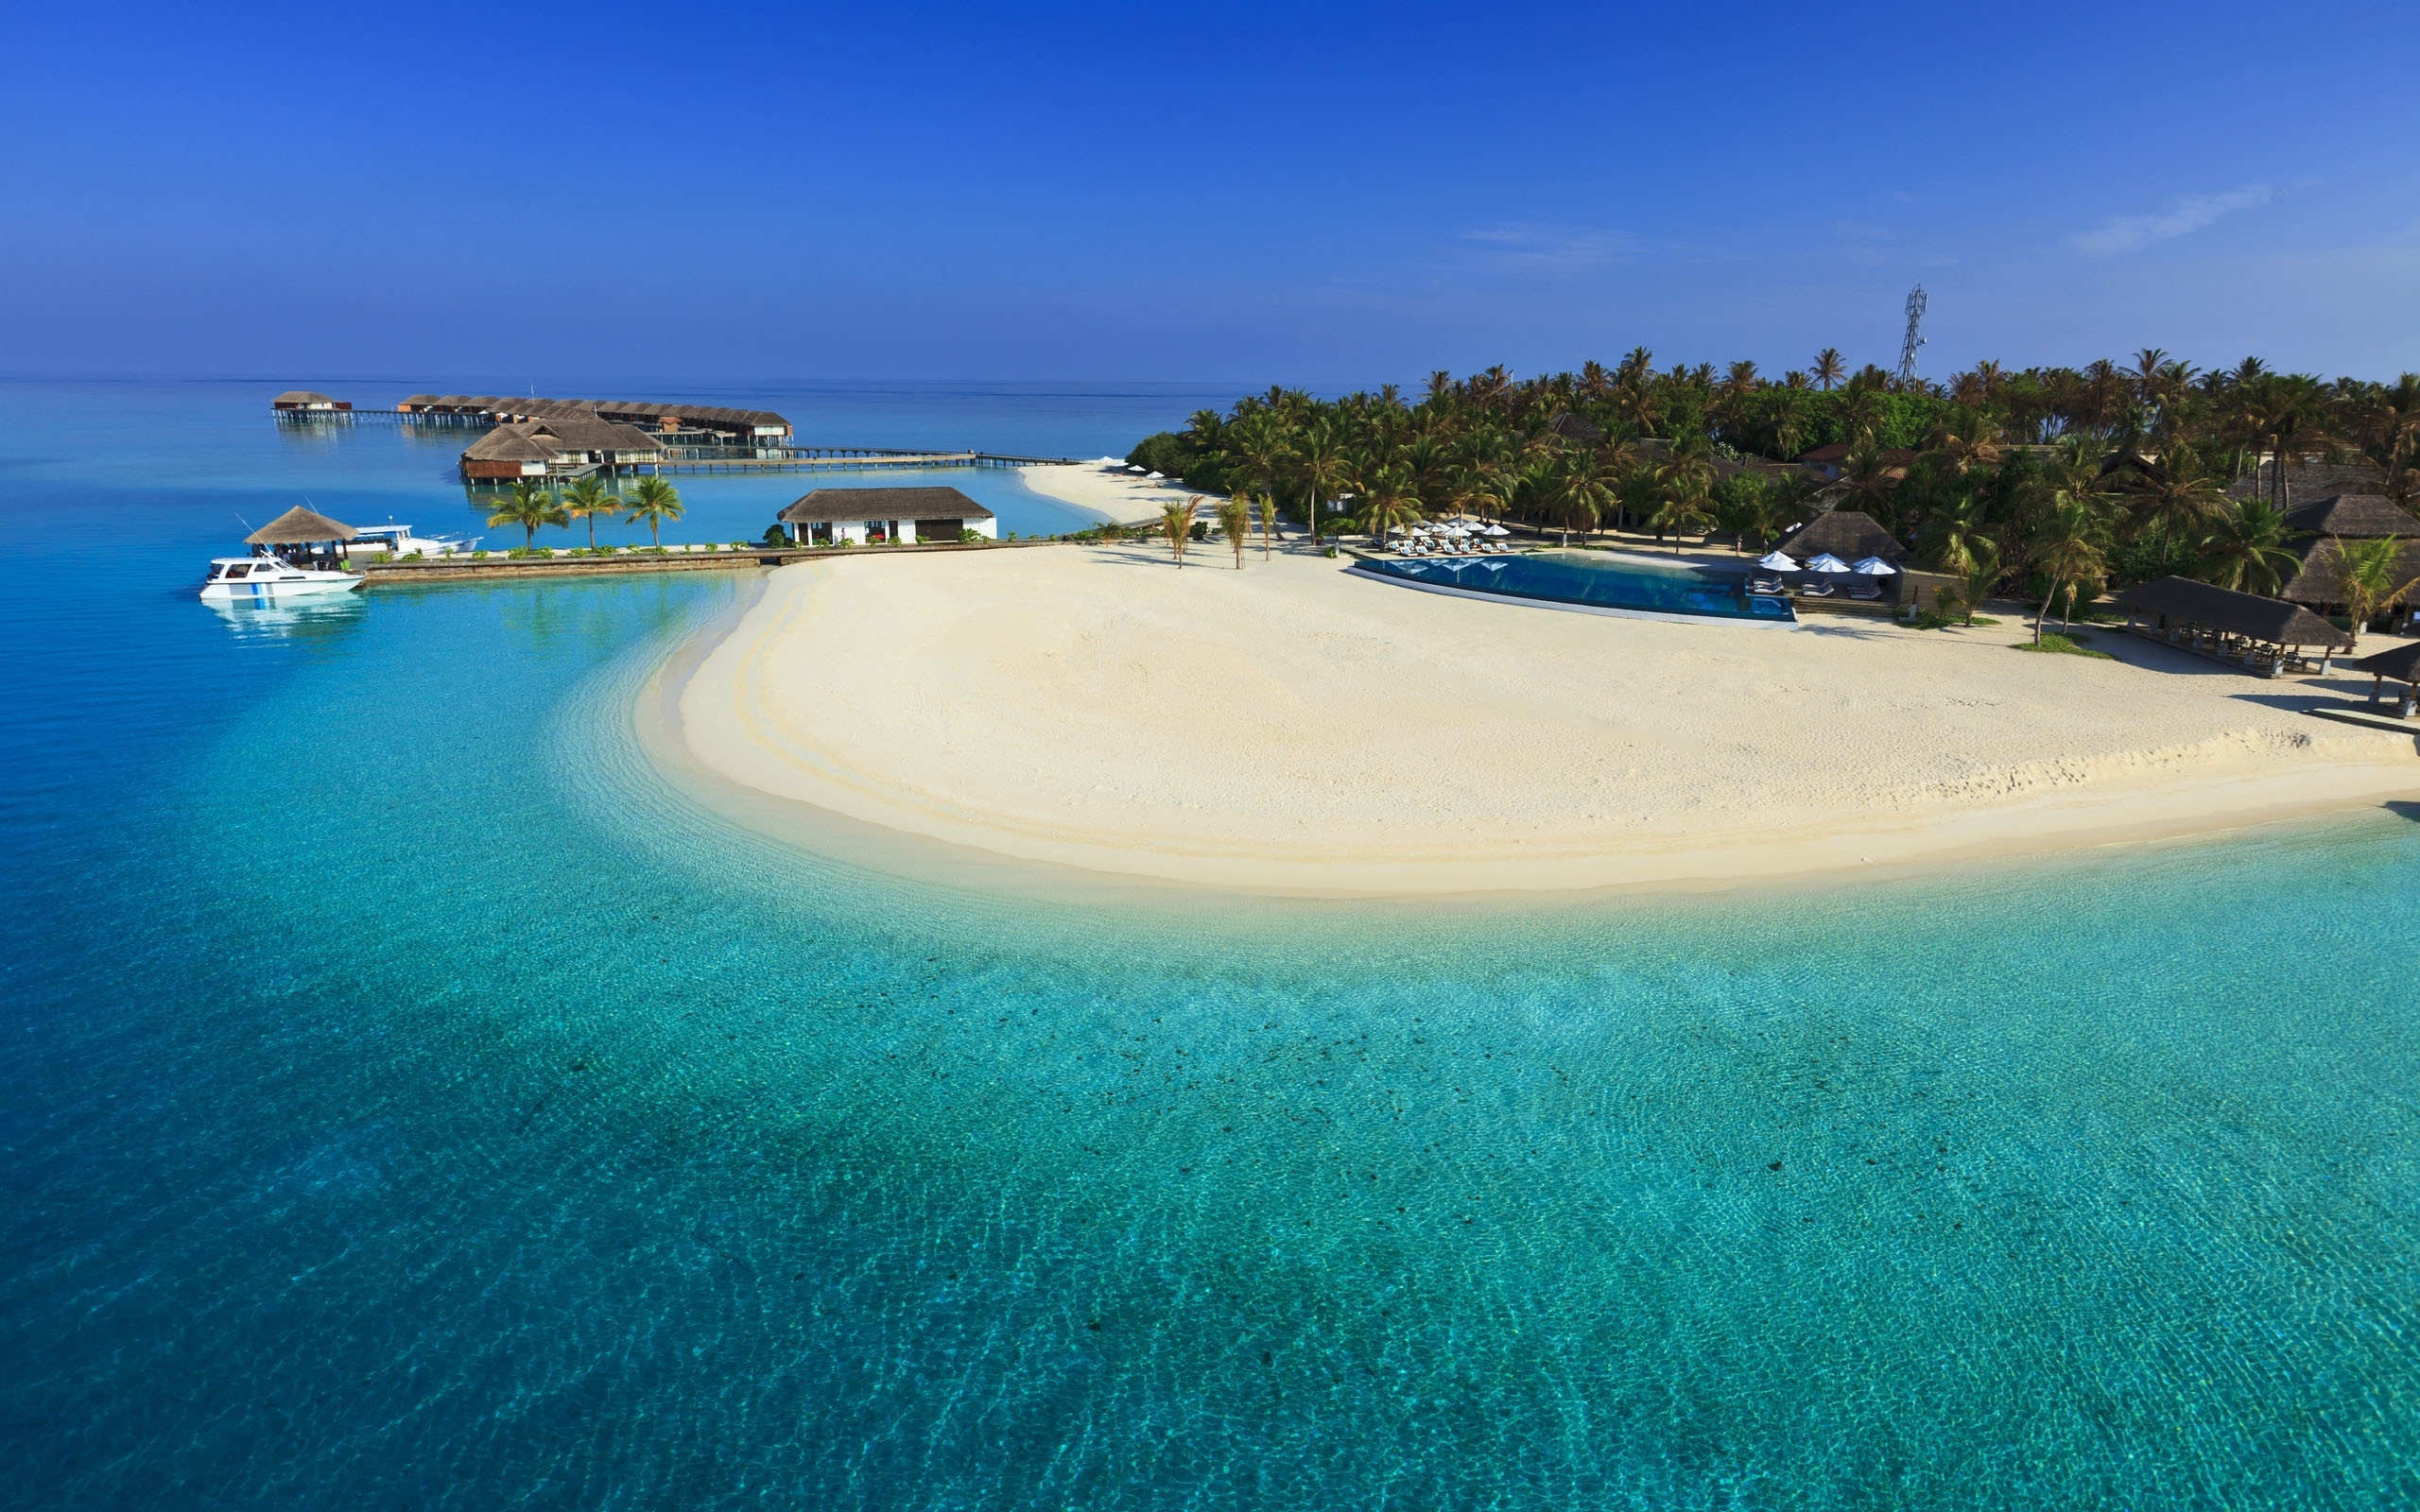 2560x1600 Maldives Luxury Resort Iphone Panoramic Wallpaper HD Pic